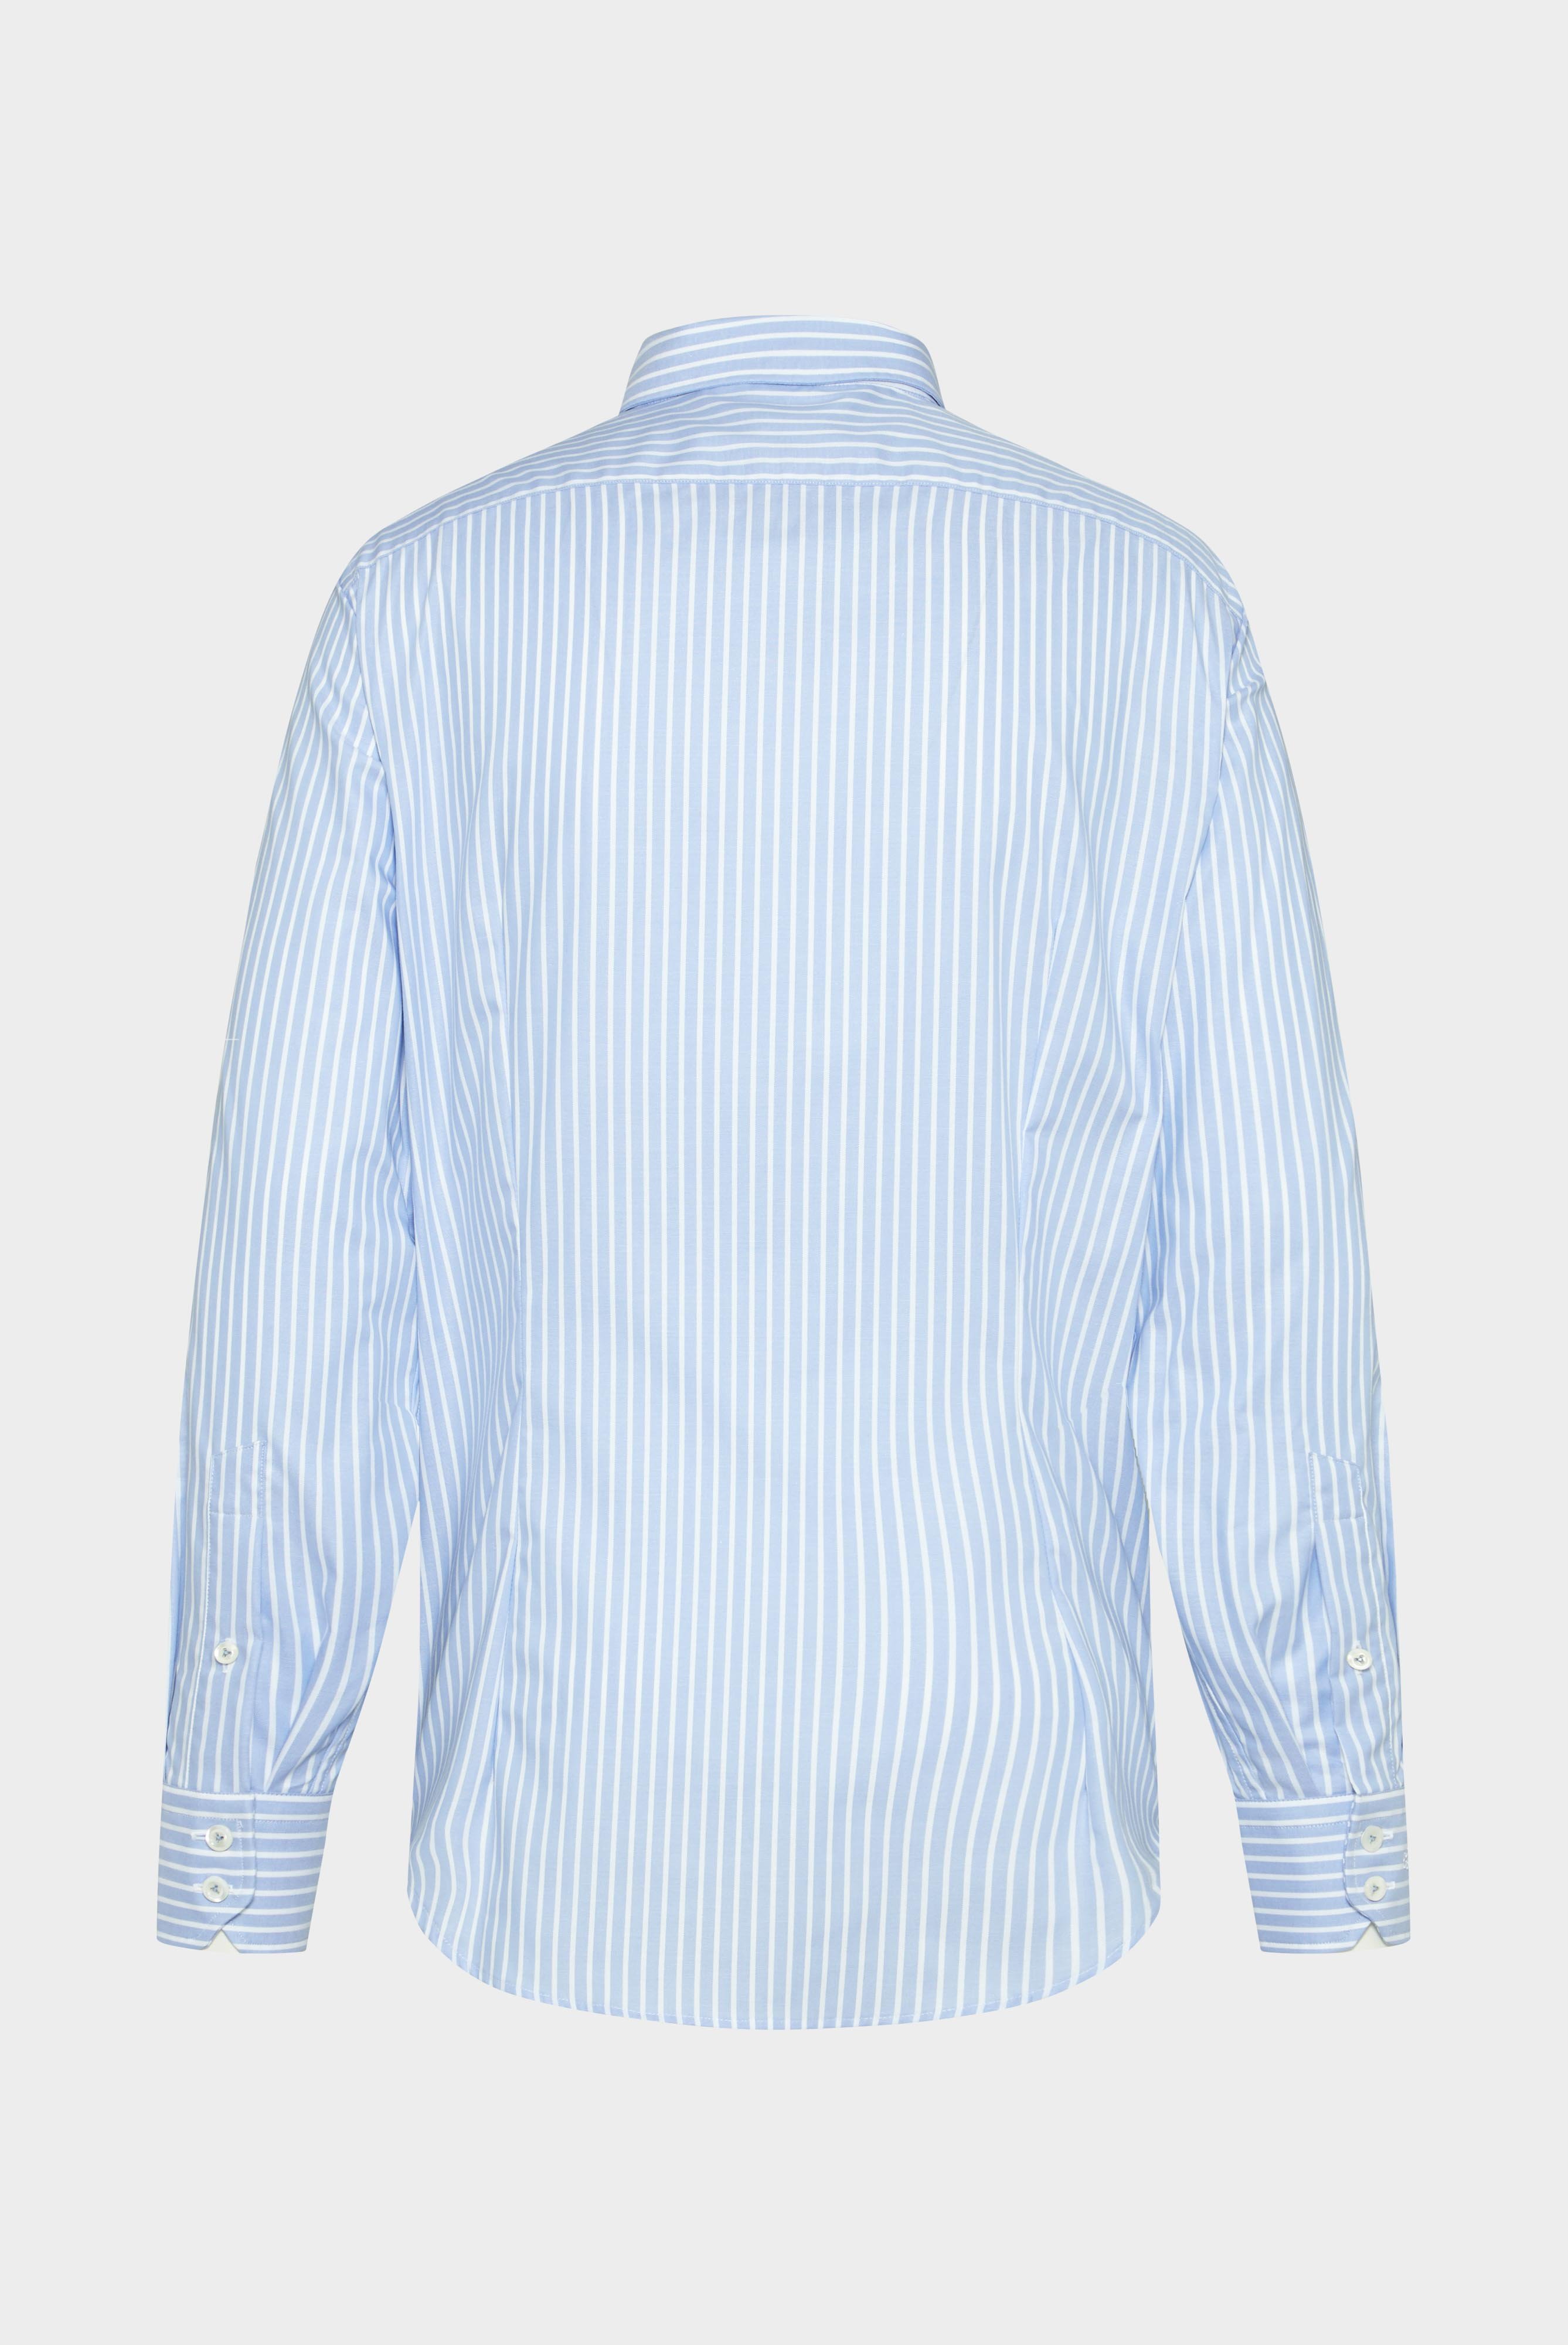 Easy Iron Shirts+Wrinkle-Free Shirt made of Organic Cotton+20.3281.NV.166009.730.37